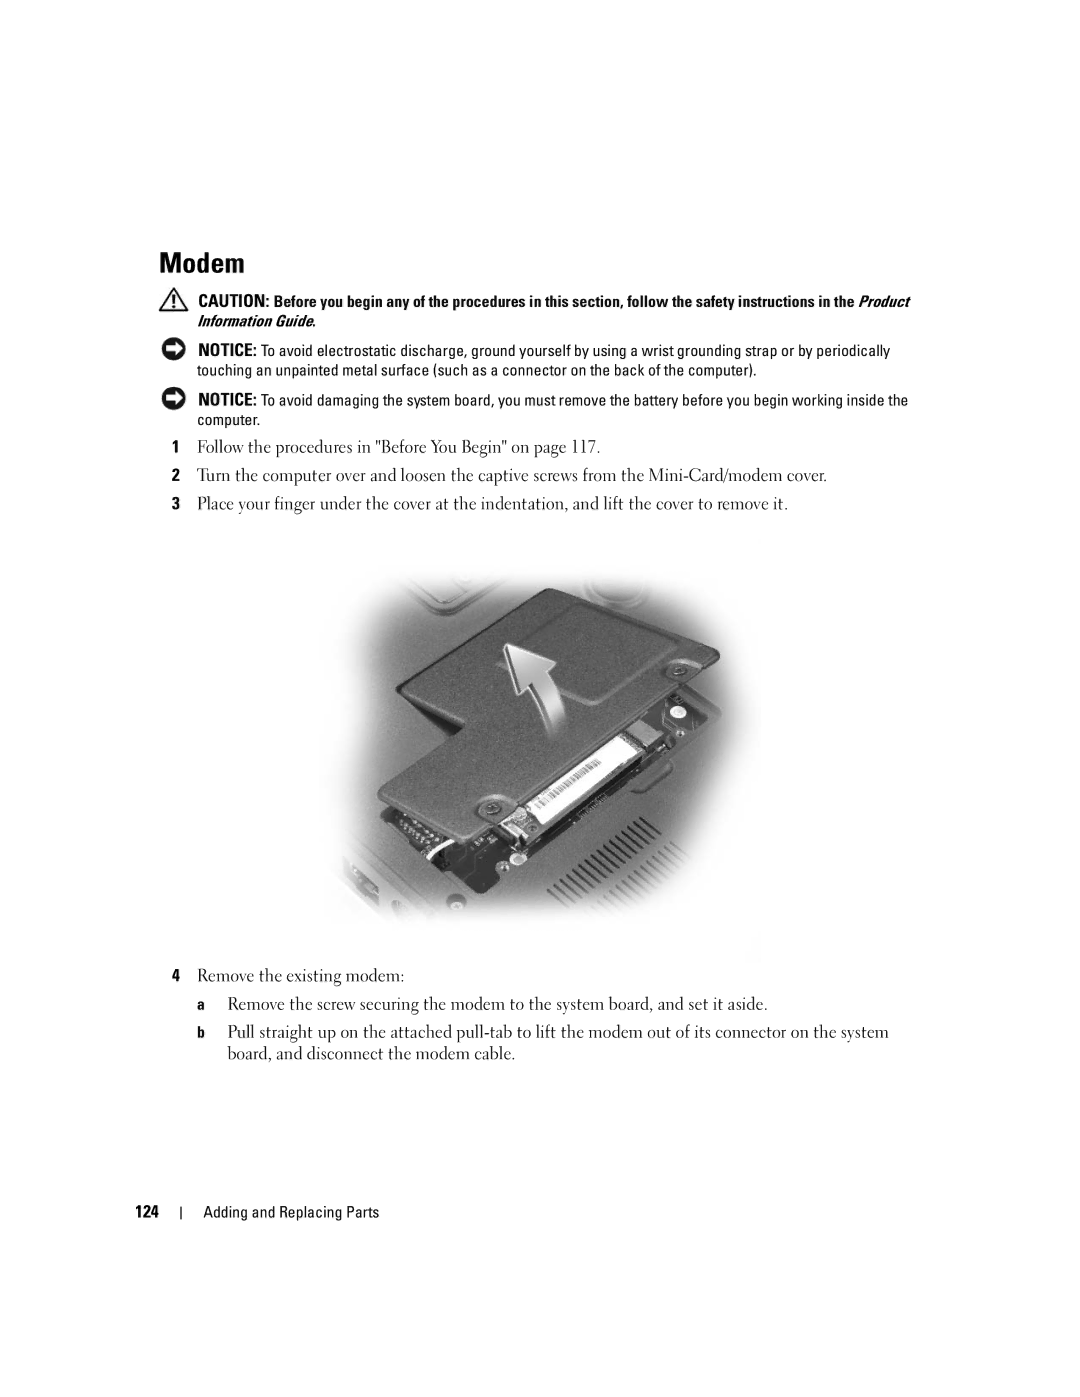 Dell PP05XB, M1710 owner manual Modem, 124 